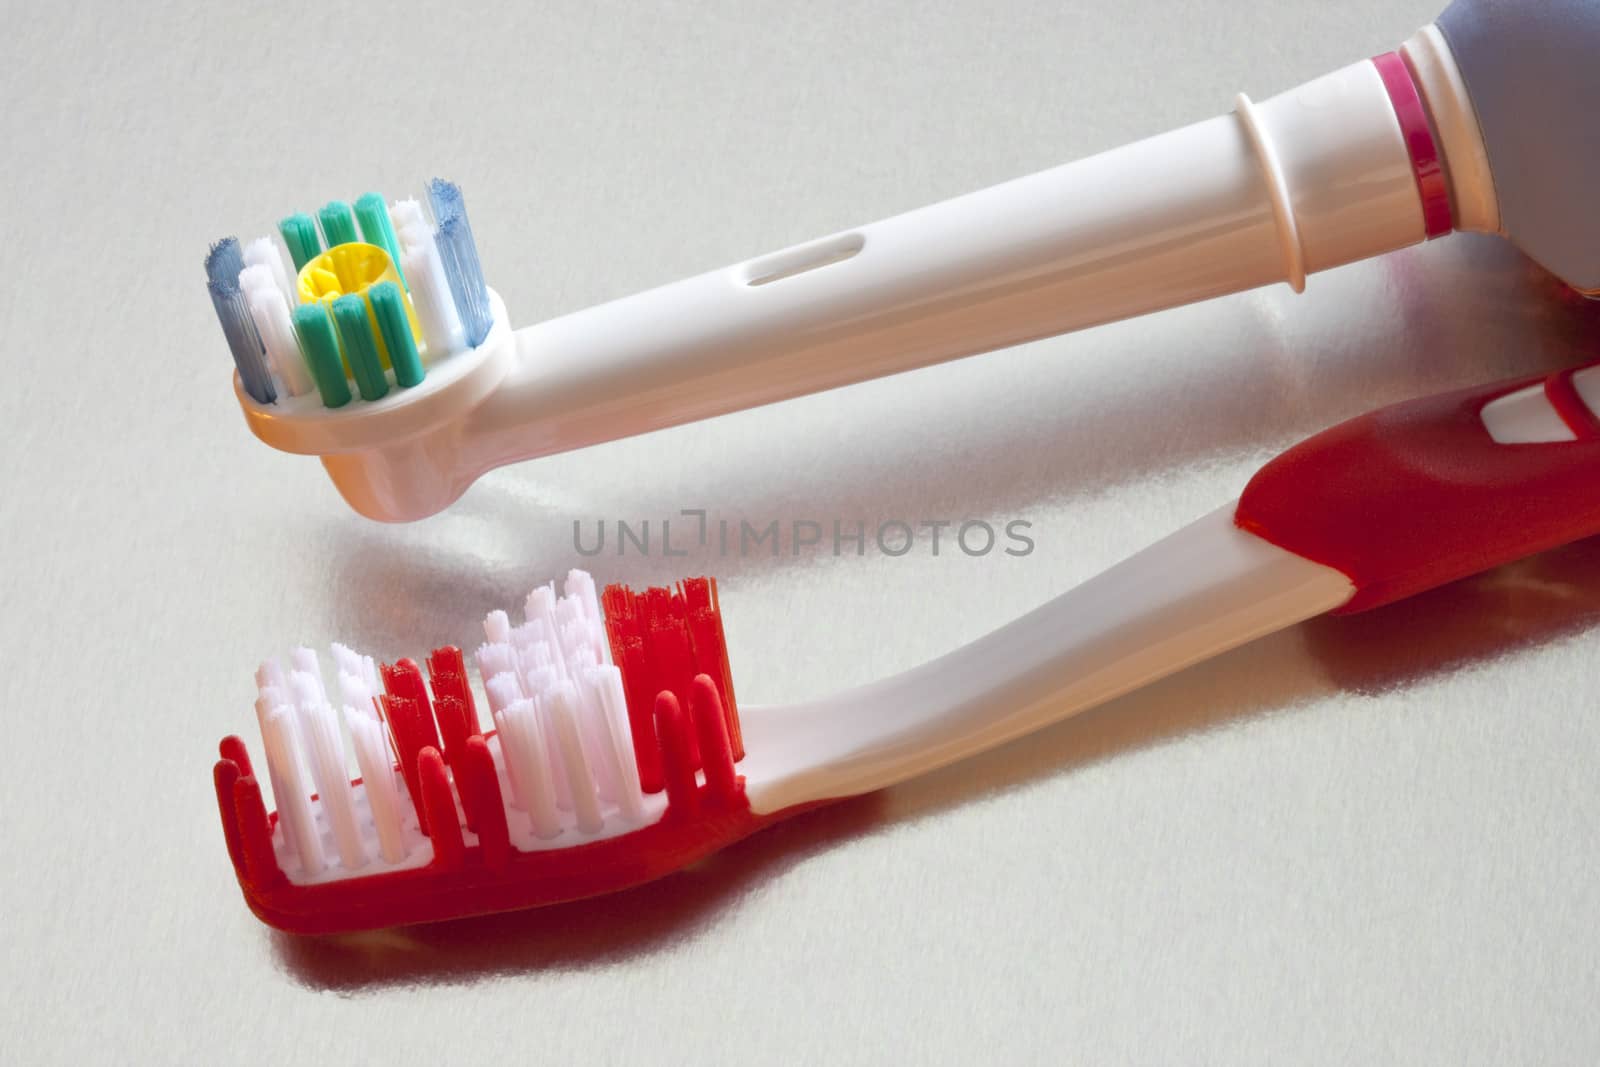 Oral Hygiene - Teeth Cleaning Equipment by SteveAllenPhoto